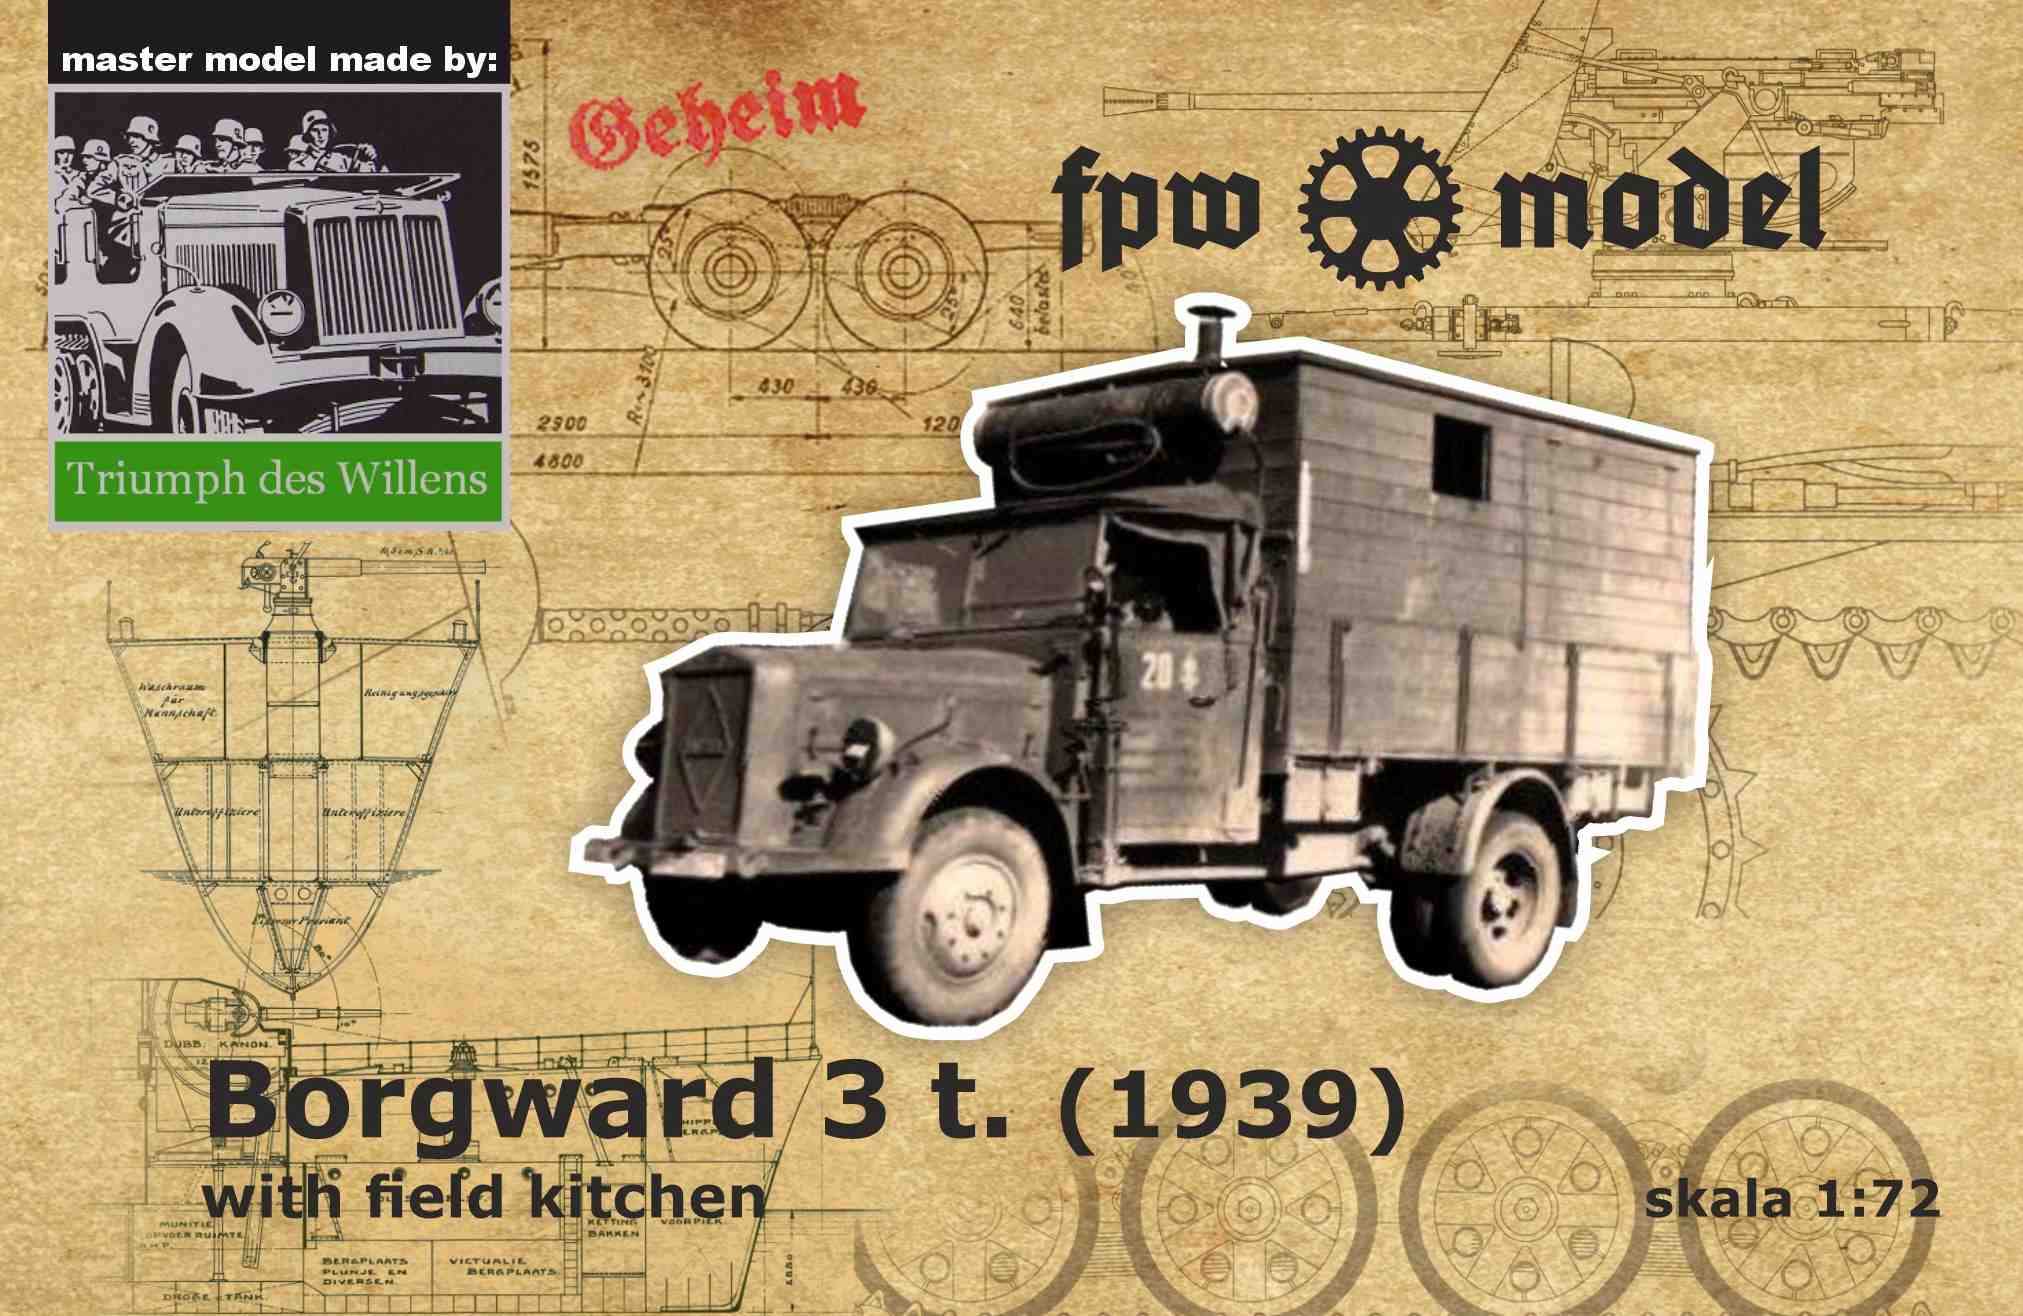 Borgward 3t (1939) with kitchen